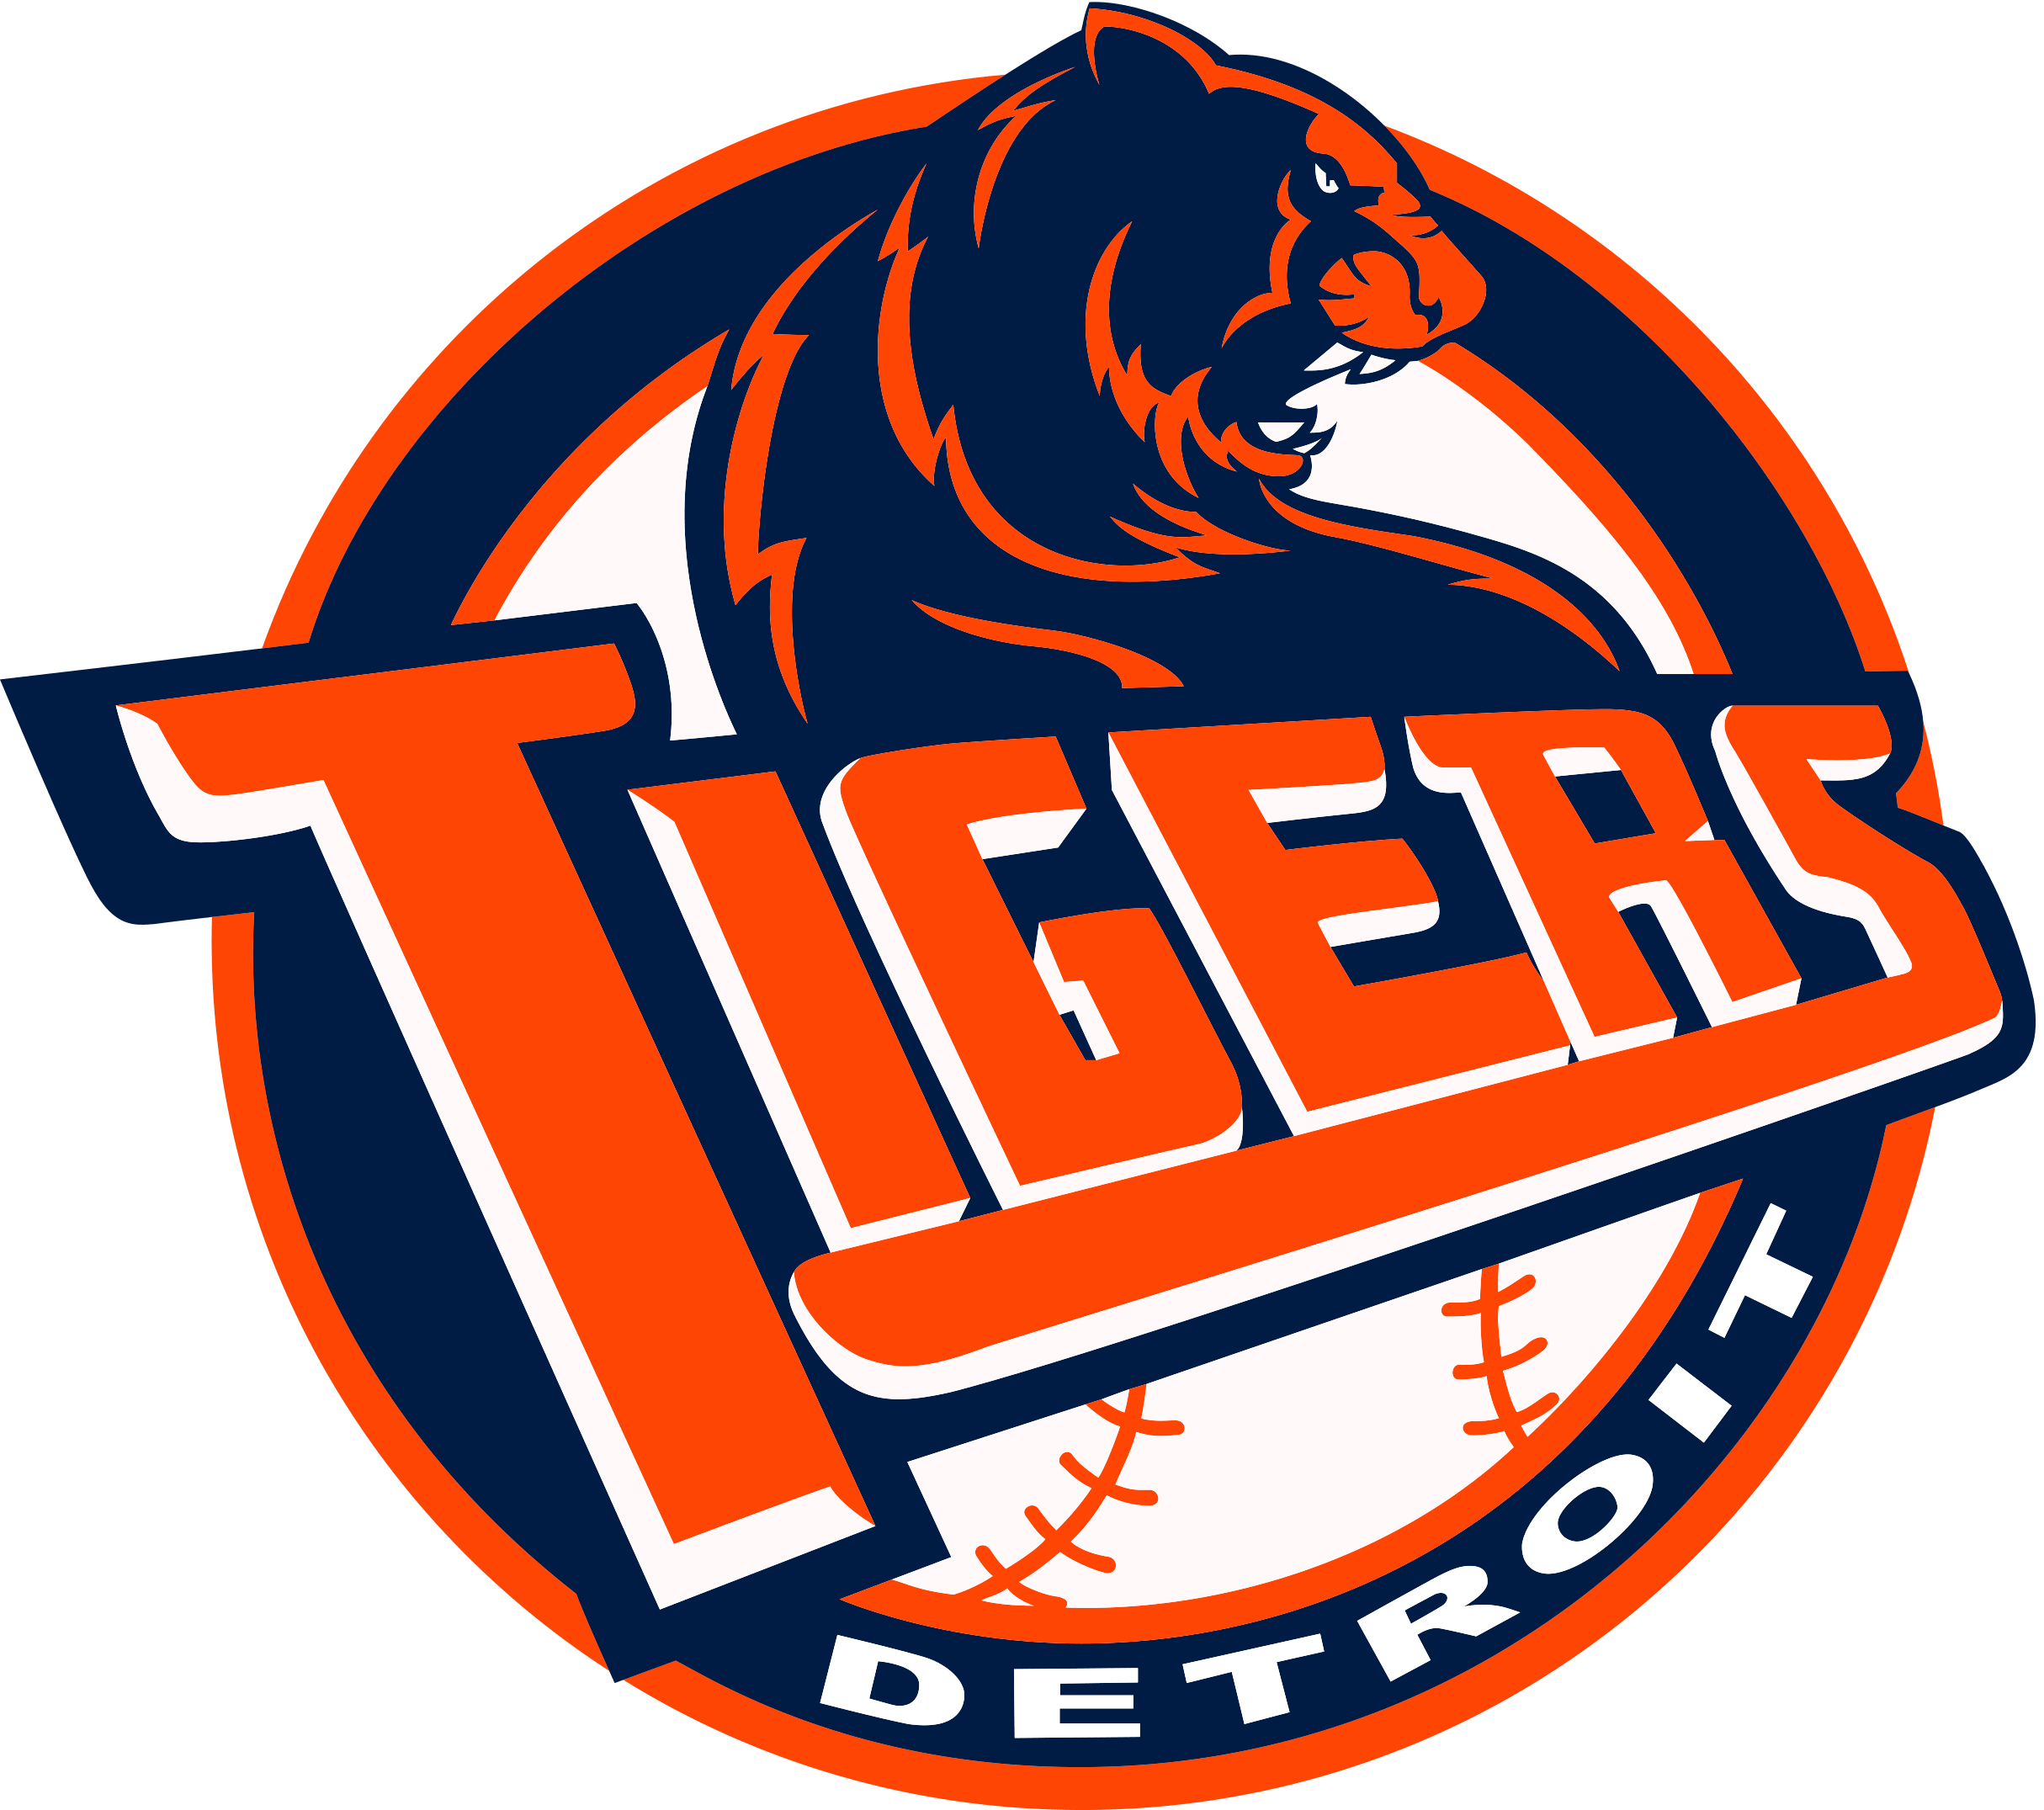 Detroit Tigers SVG • MLB Baseball Team T-shirt Design SVG Cut